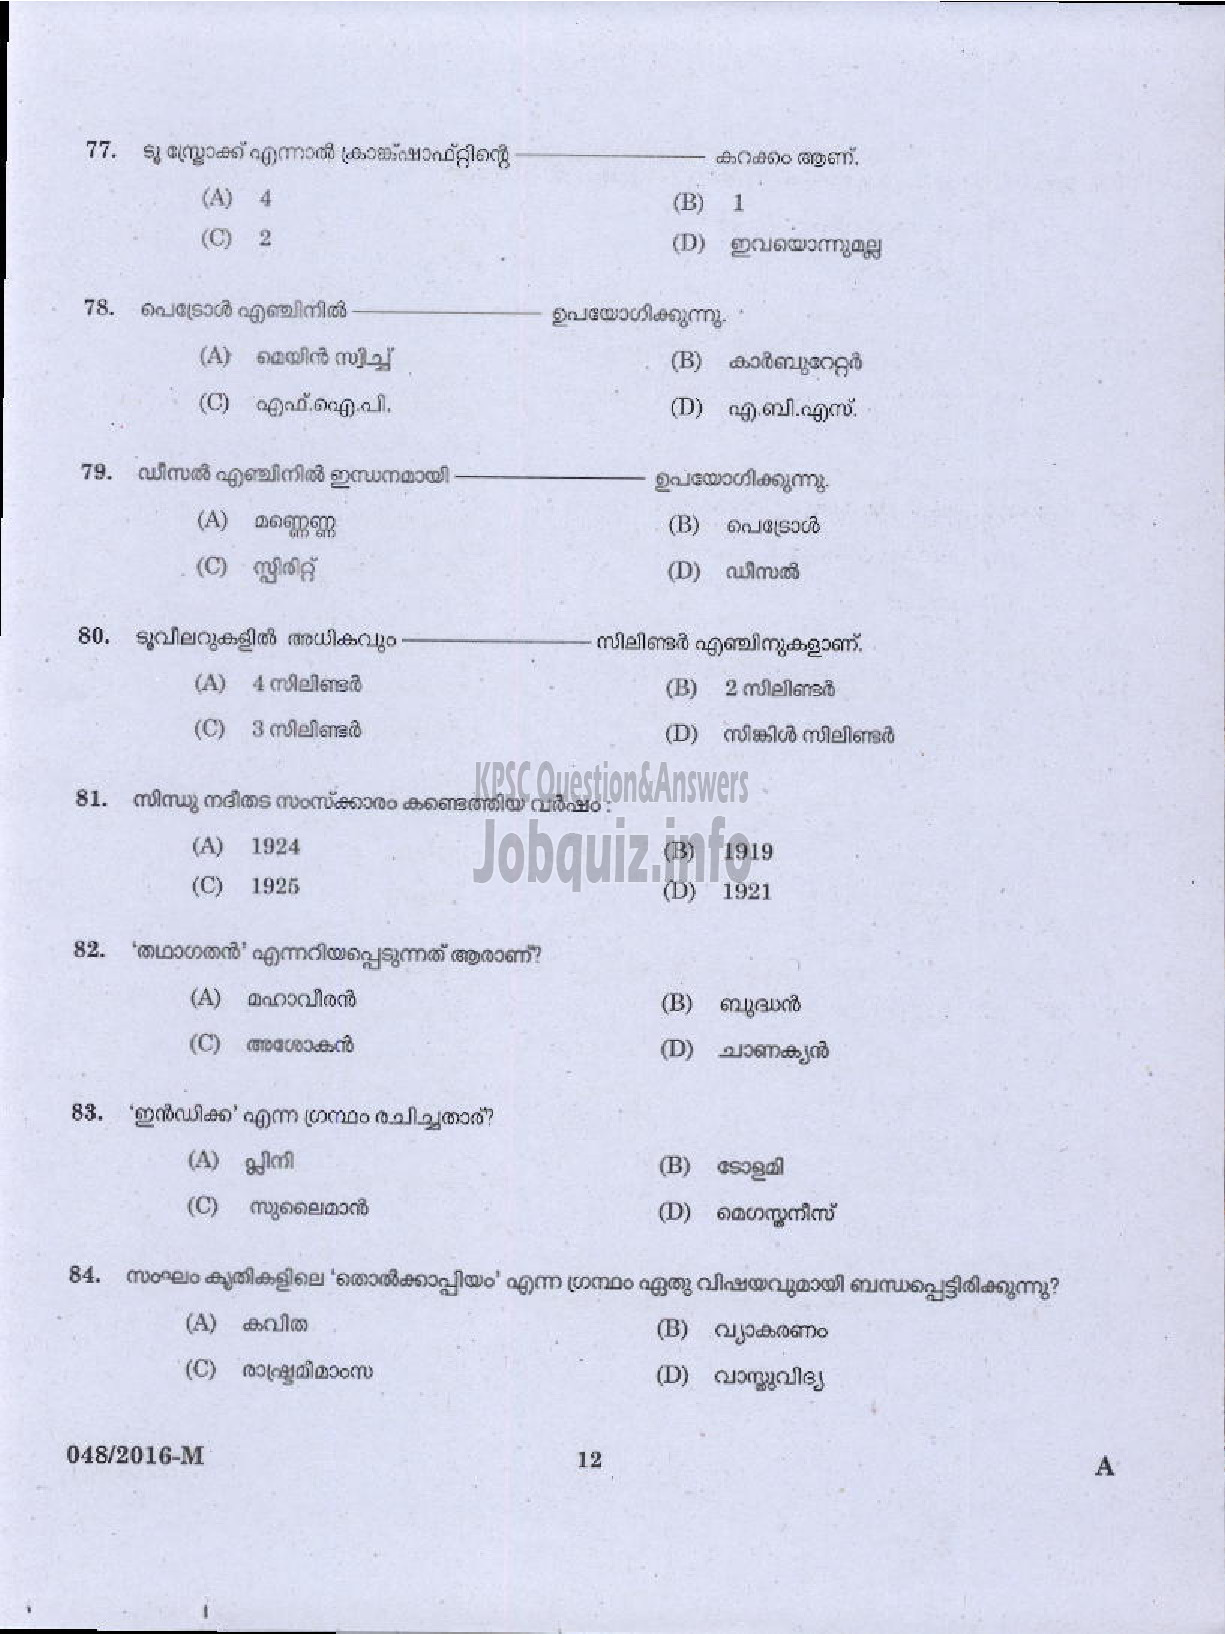 Kerala PSC Question Paper - METER READER / SPOT BILLER KSEB-10